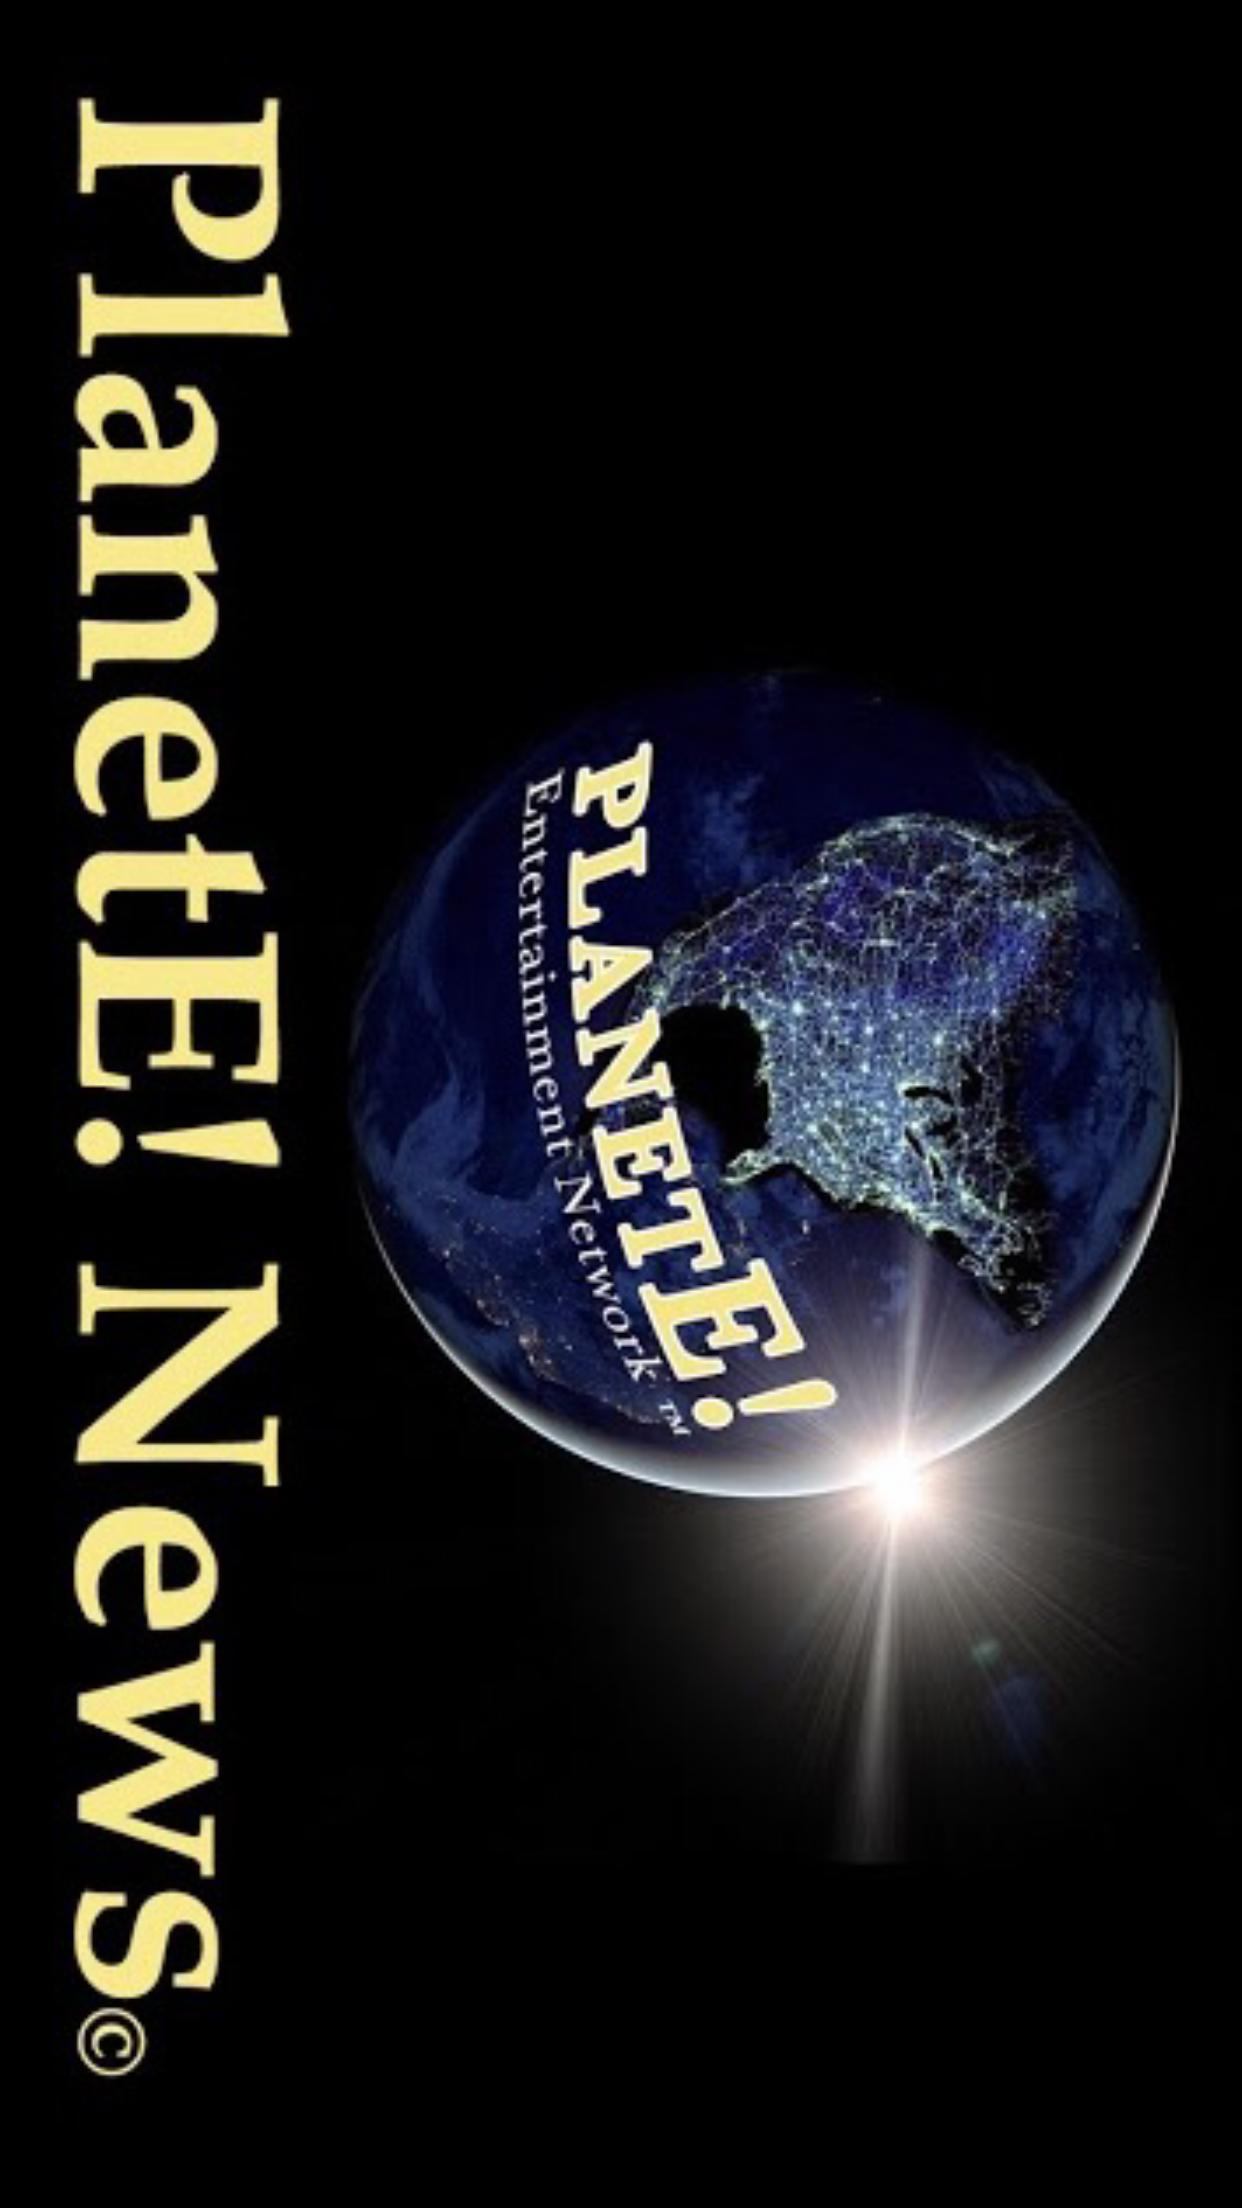 PlanetE! Entertainment Network